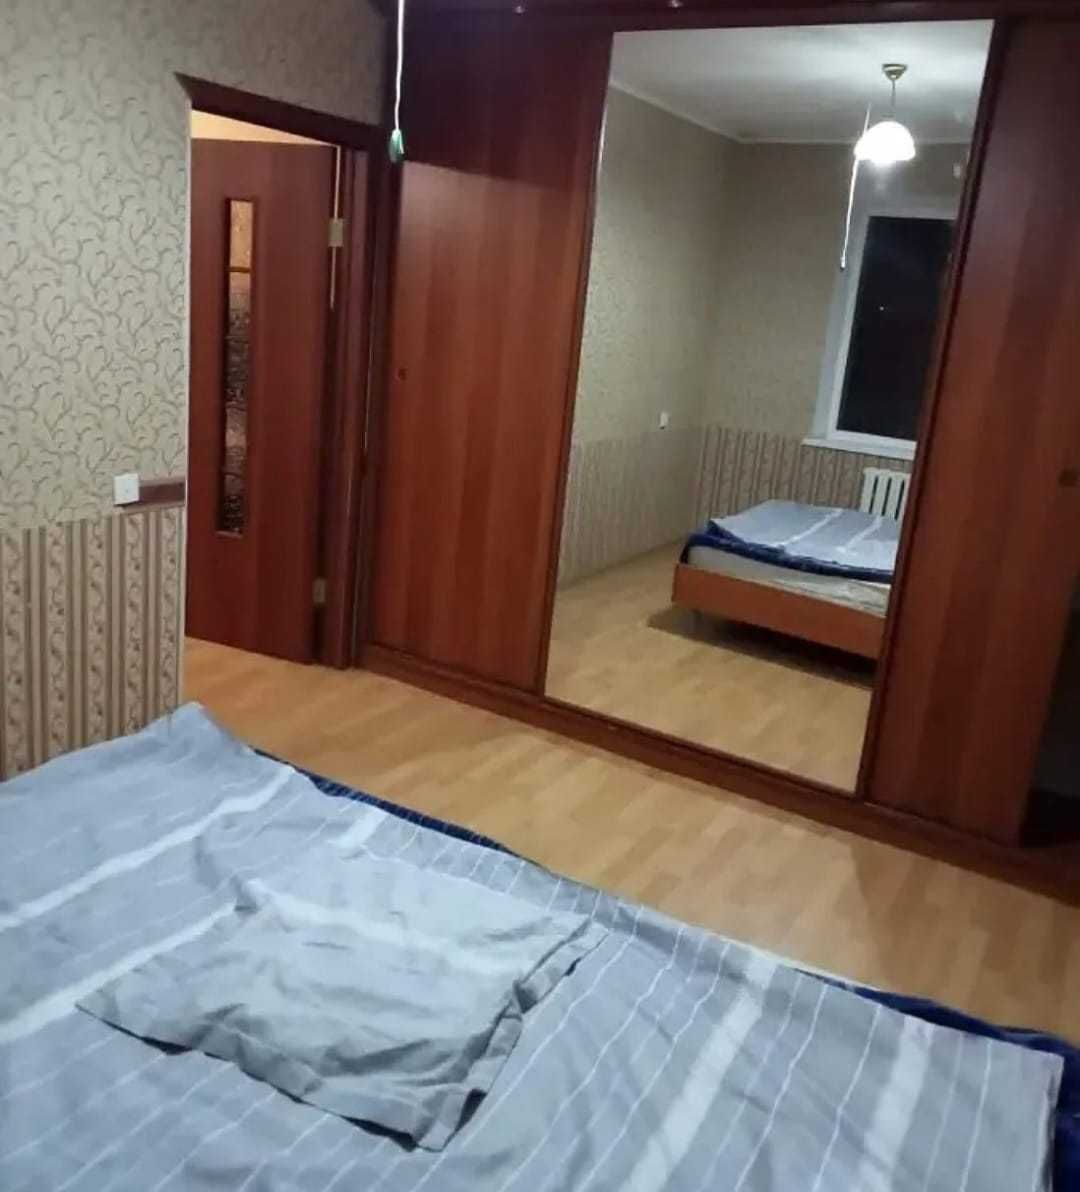 Продается 2-х комн. квартира в новом доме по ул. Муканова 80